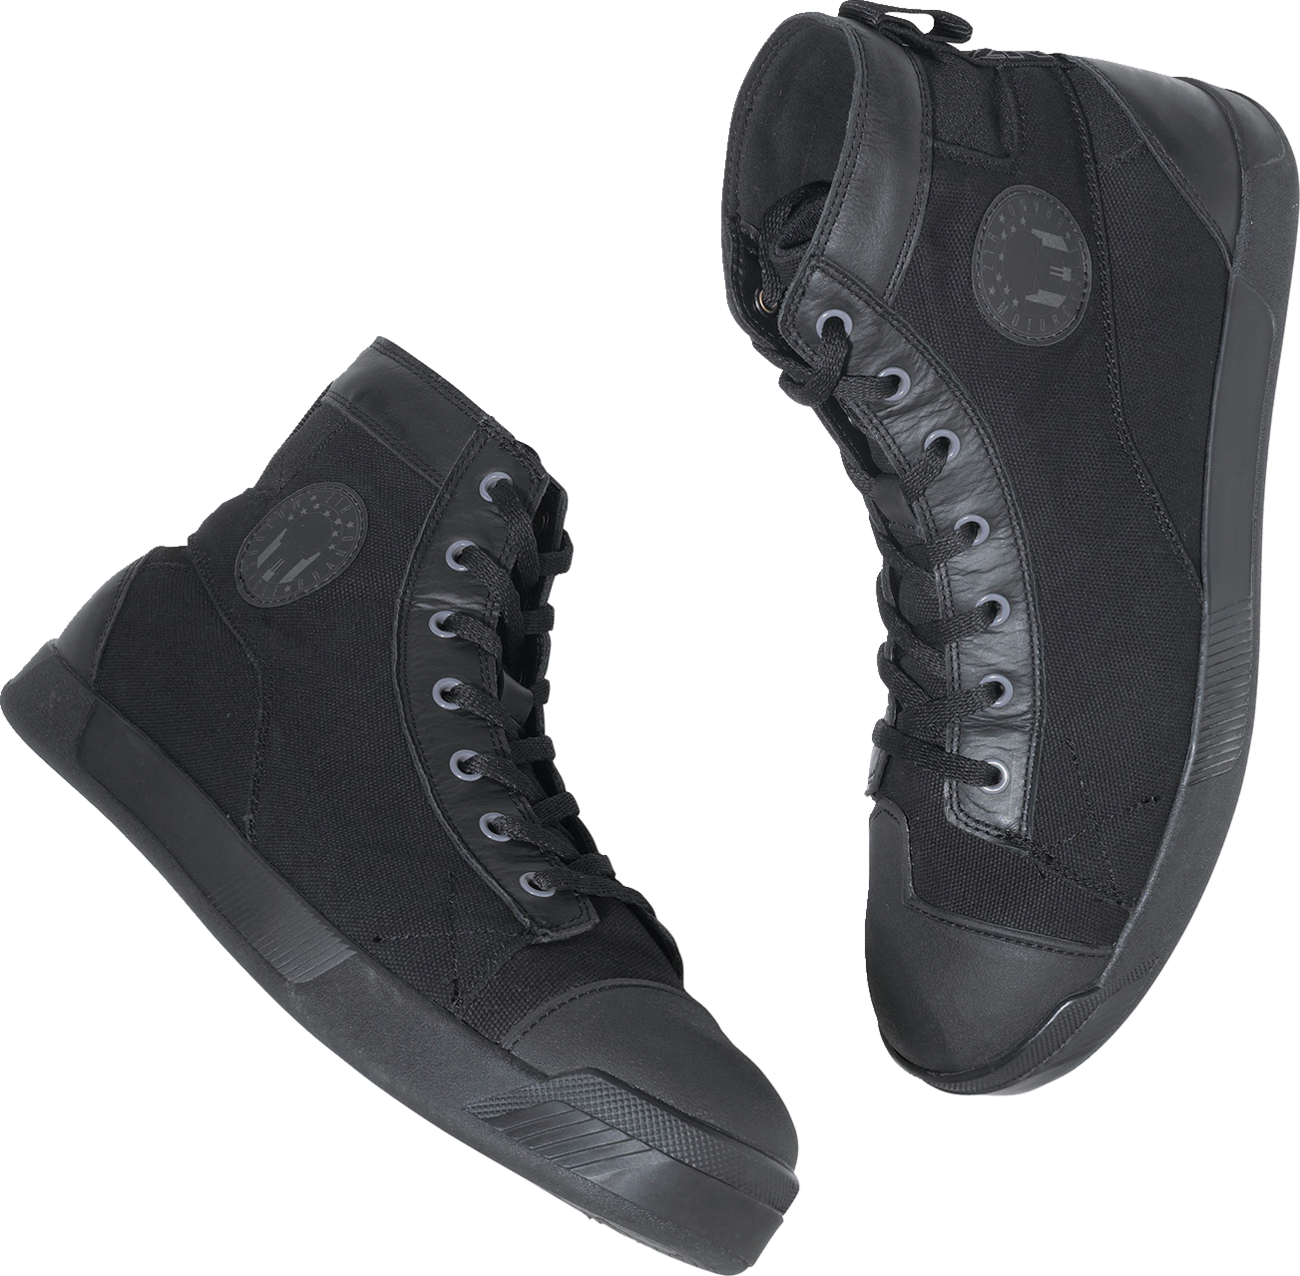 Z1R Haggard Boots - Black - US 9 3401-0955